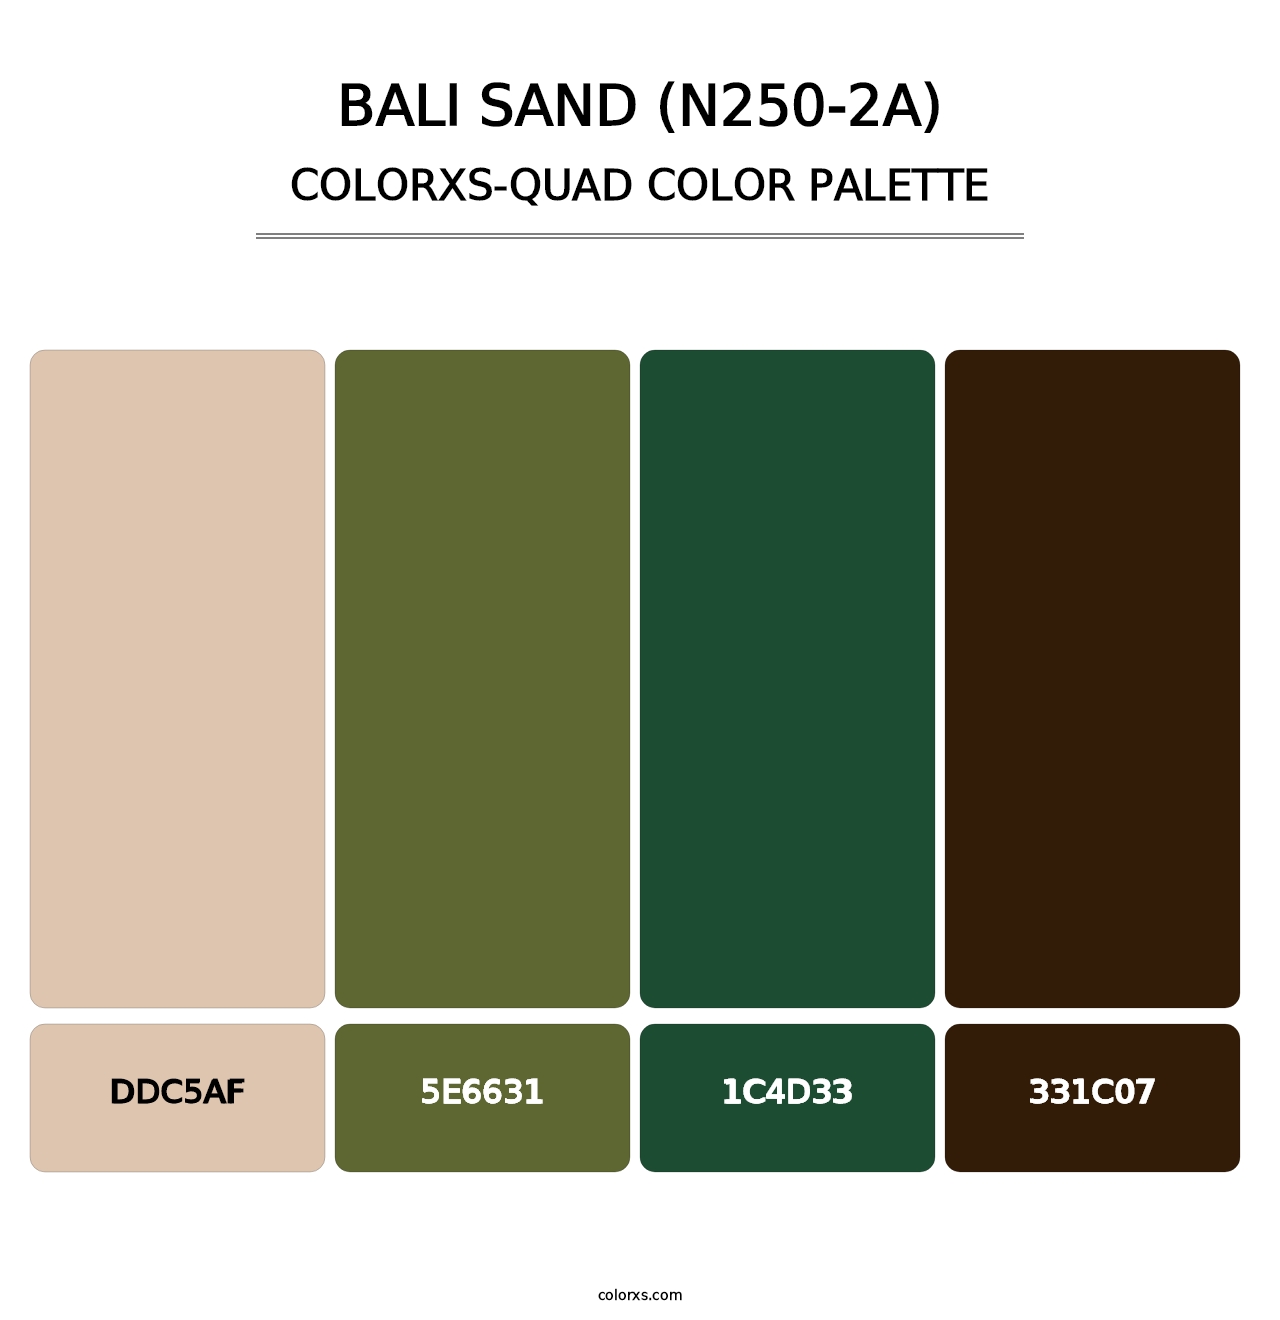 Bali Sand (N250-2A) - Colorxs Quad Palette